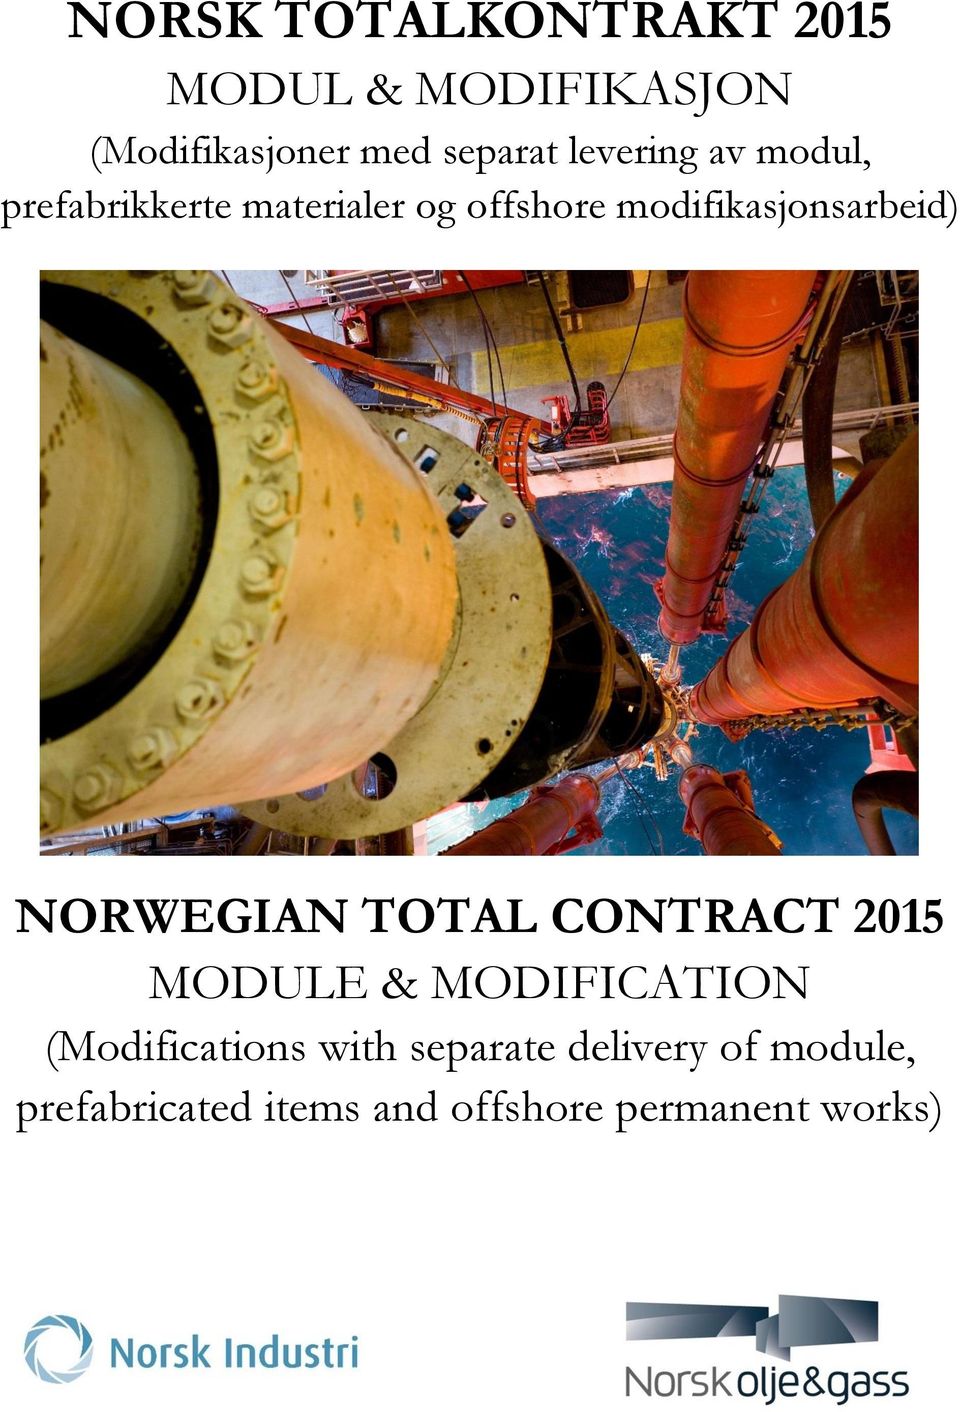 NORWEGIAN TOTAL CONTRACT 2015 MODULE & MODIFICATION